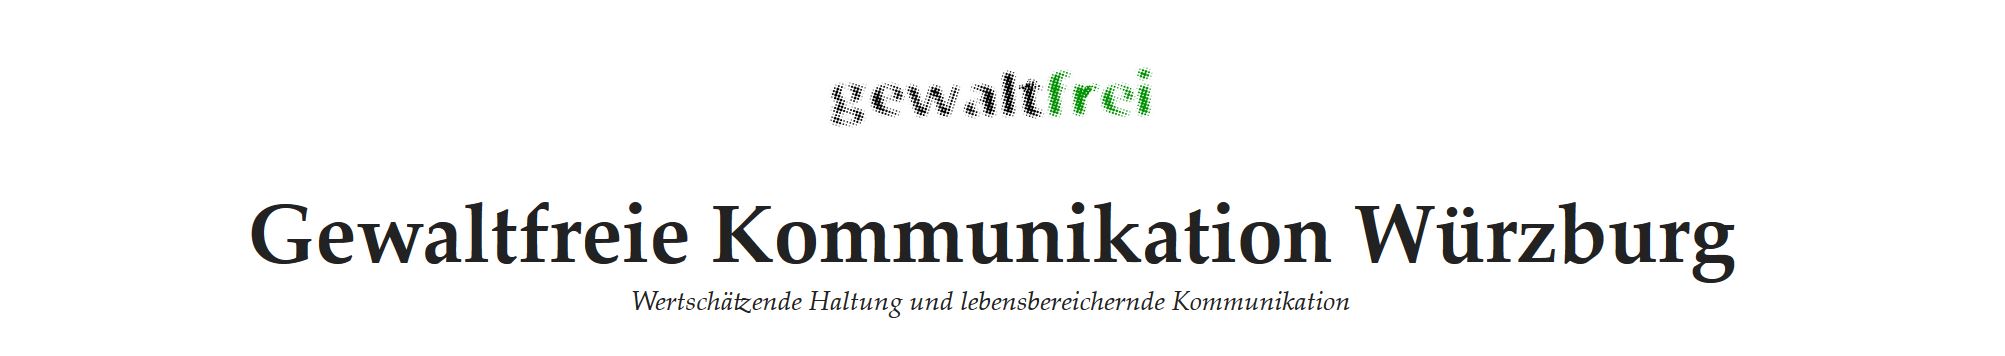 Gewaltfreie Kommunikation Würzburg